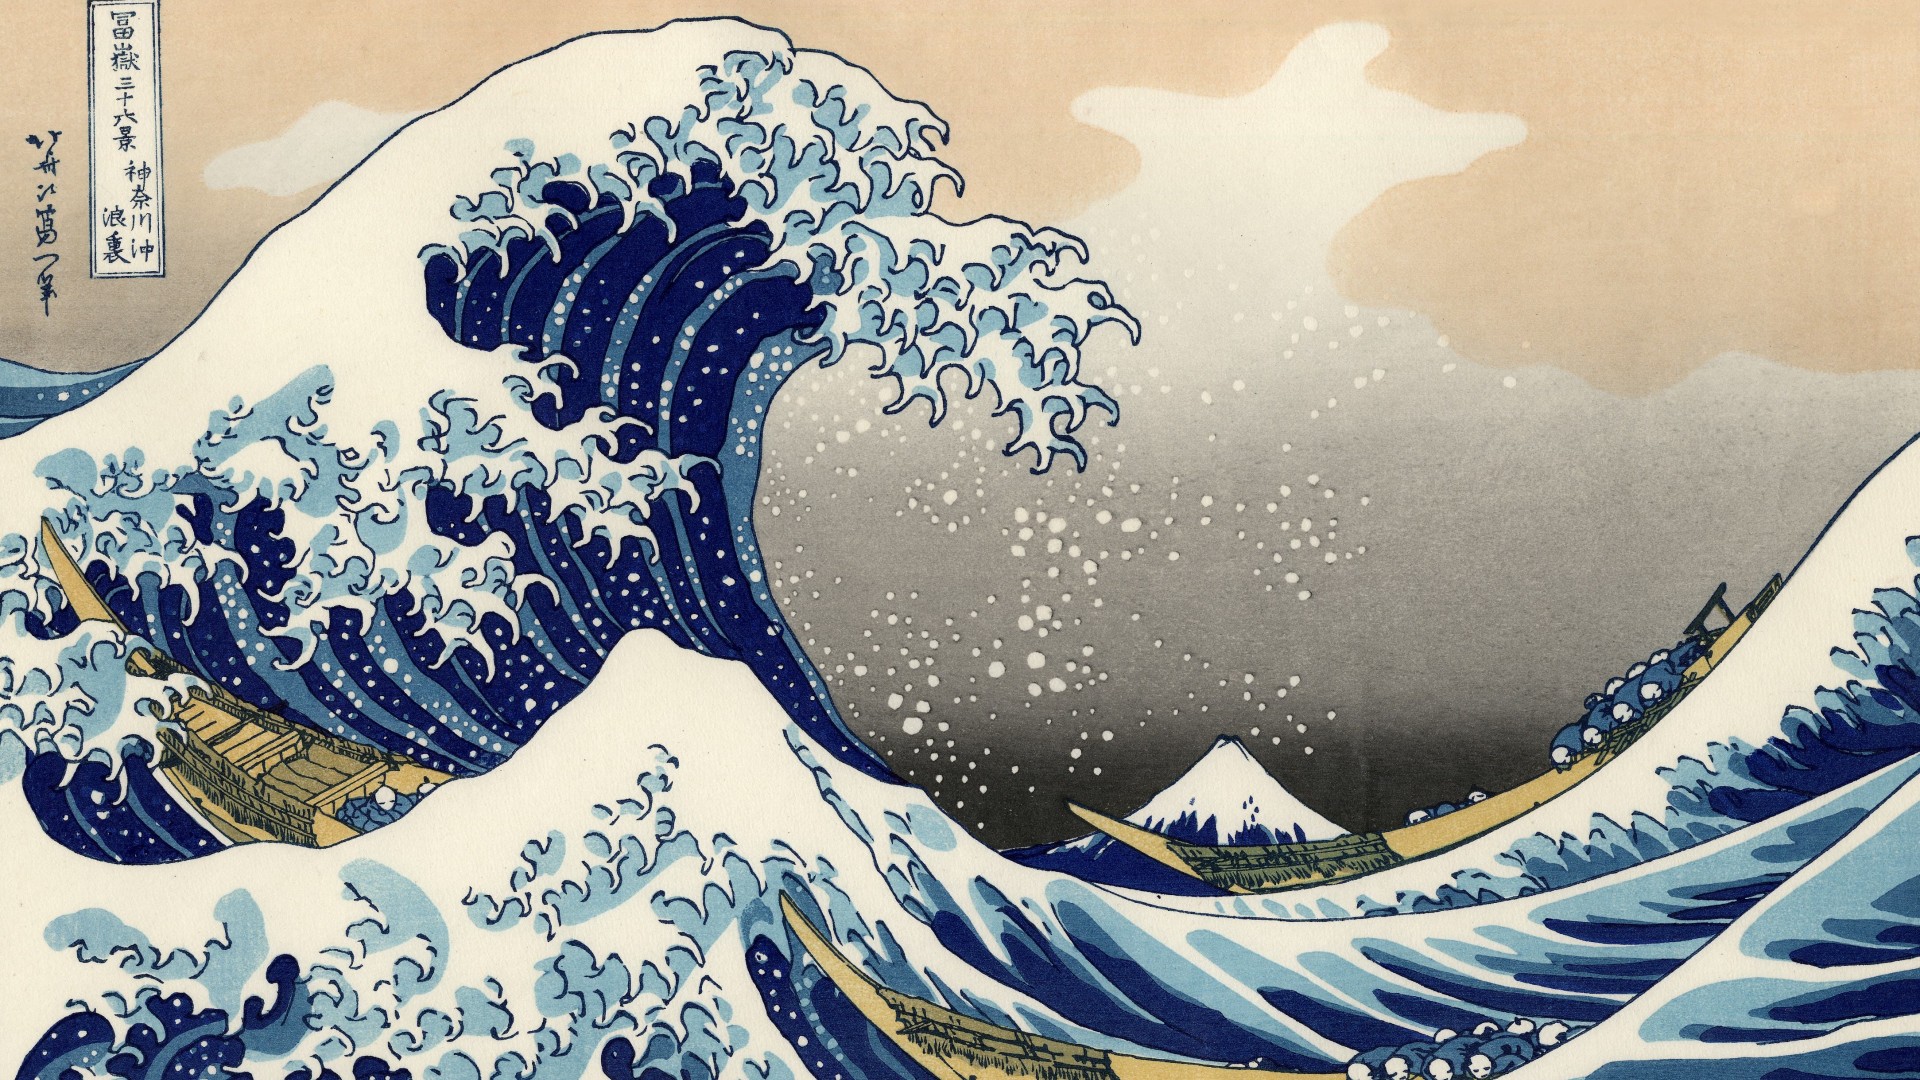  Great Wave off Kanagawa Wallpaper Japan Art HD Desktop Wallpapers